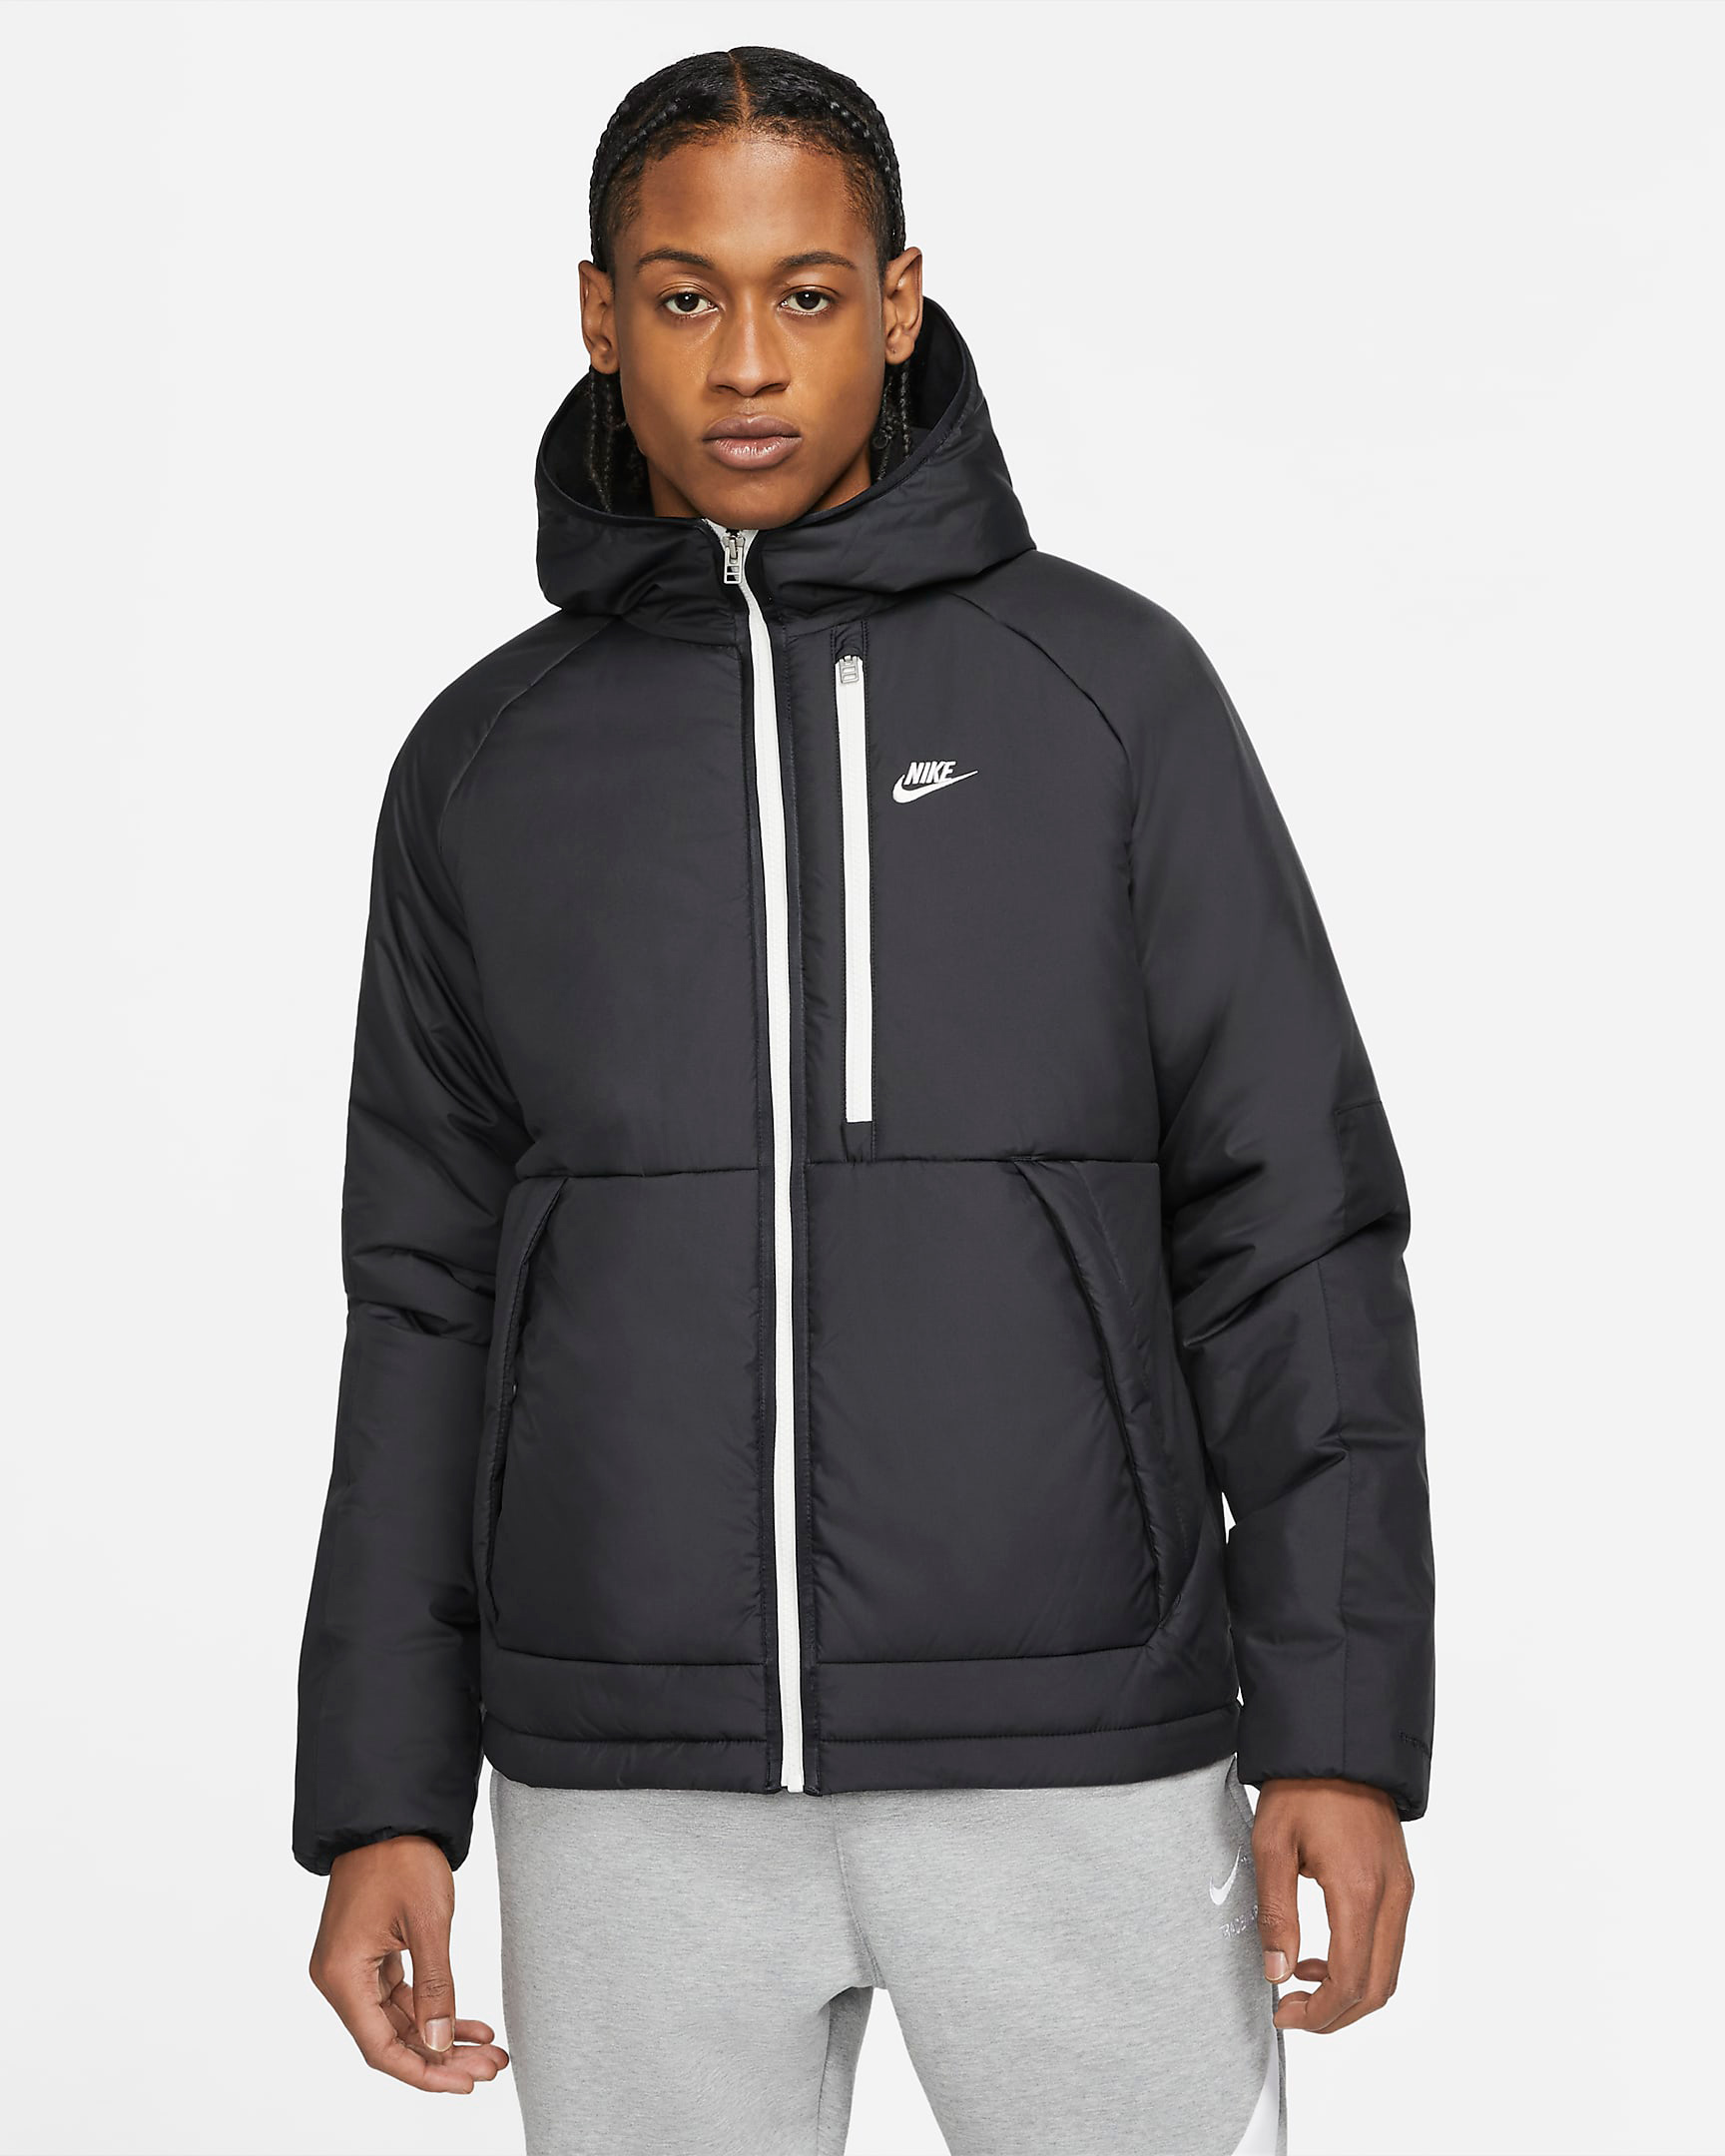 nike-sportswear-therma-fit-legacy-hooded-jacket-black-sail